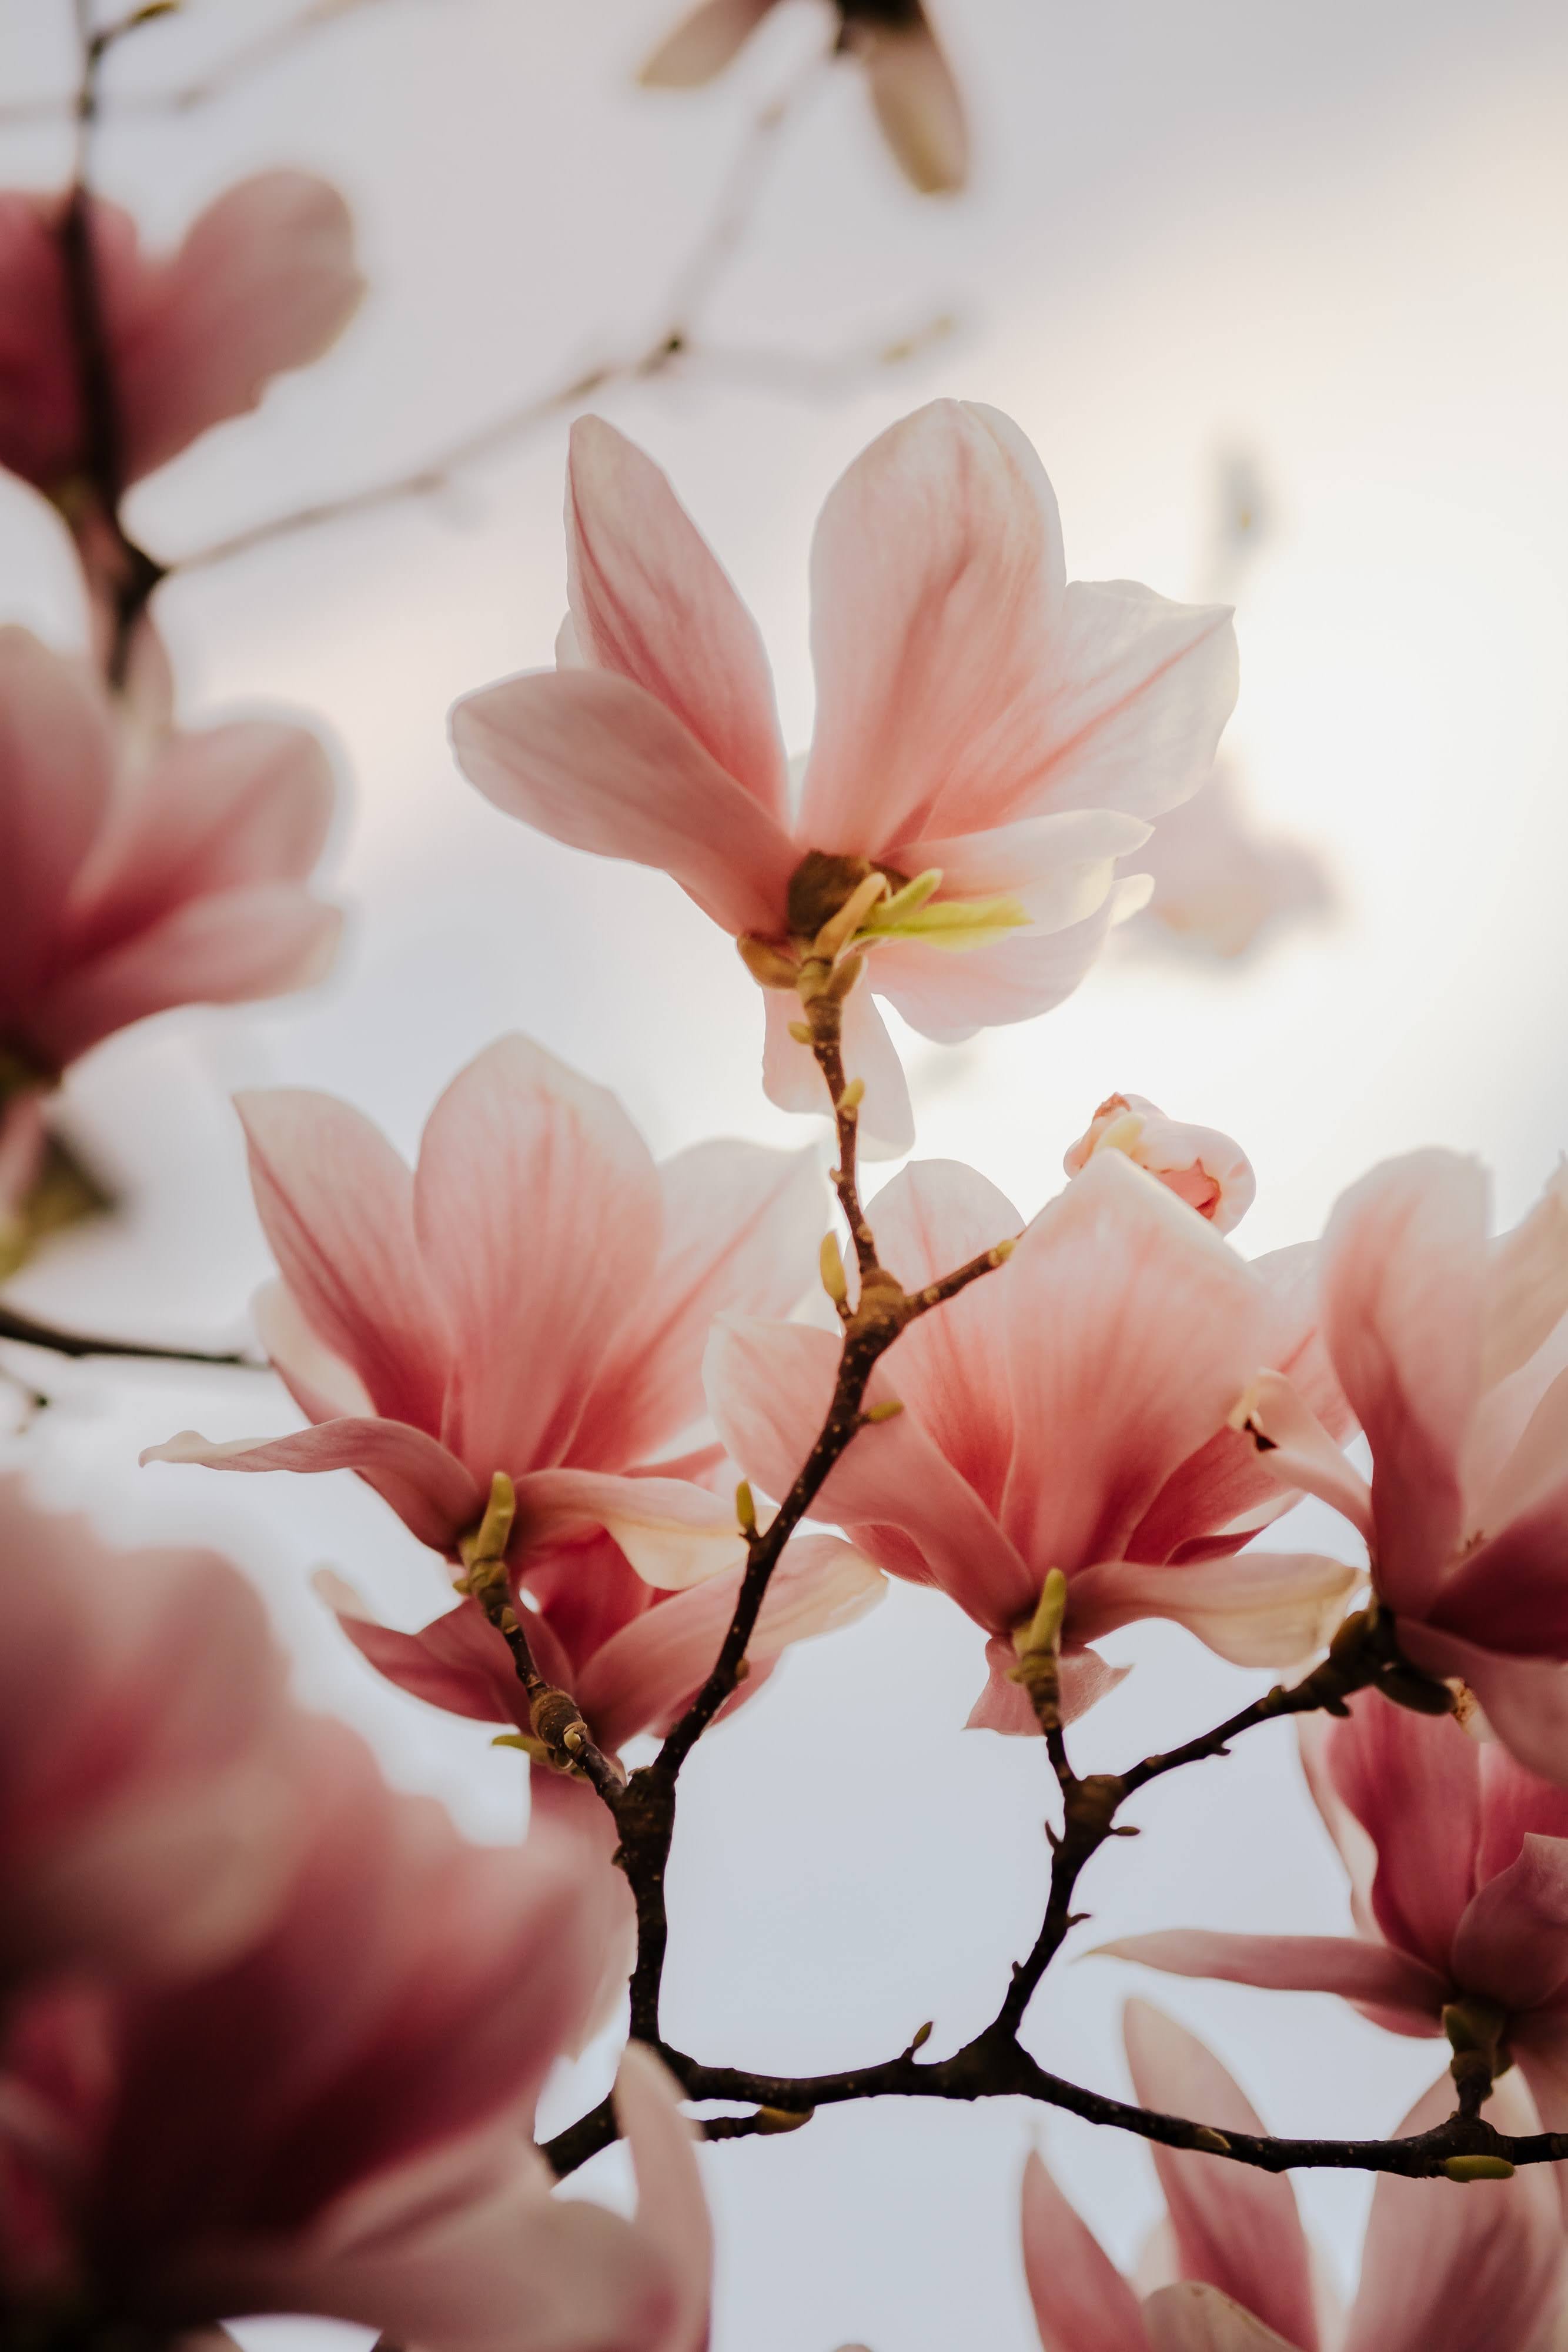 Magnolia Tree | Photo by Bianca Ackermann via Unsplash